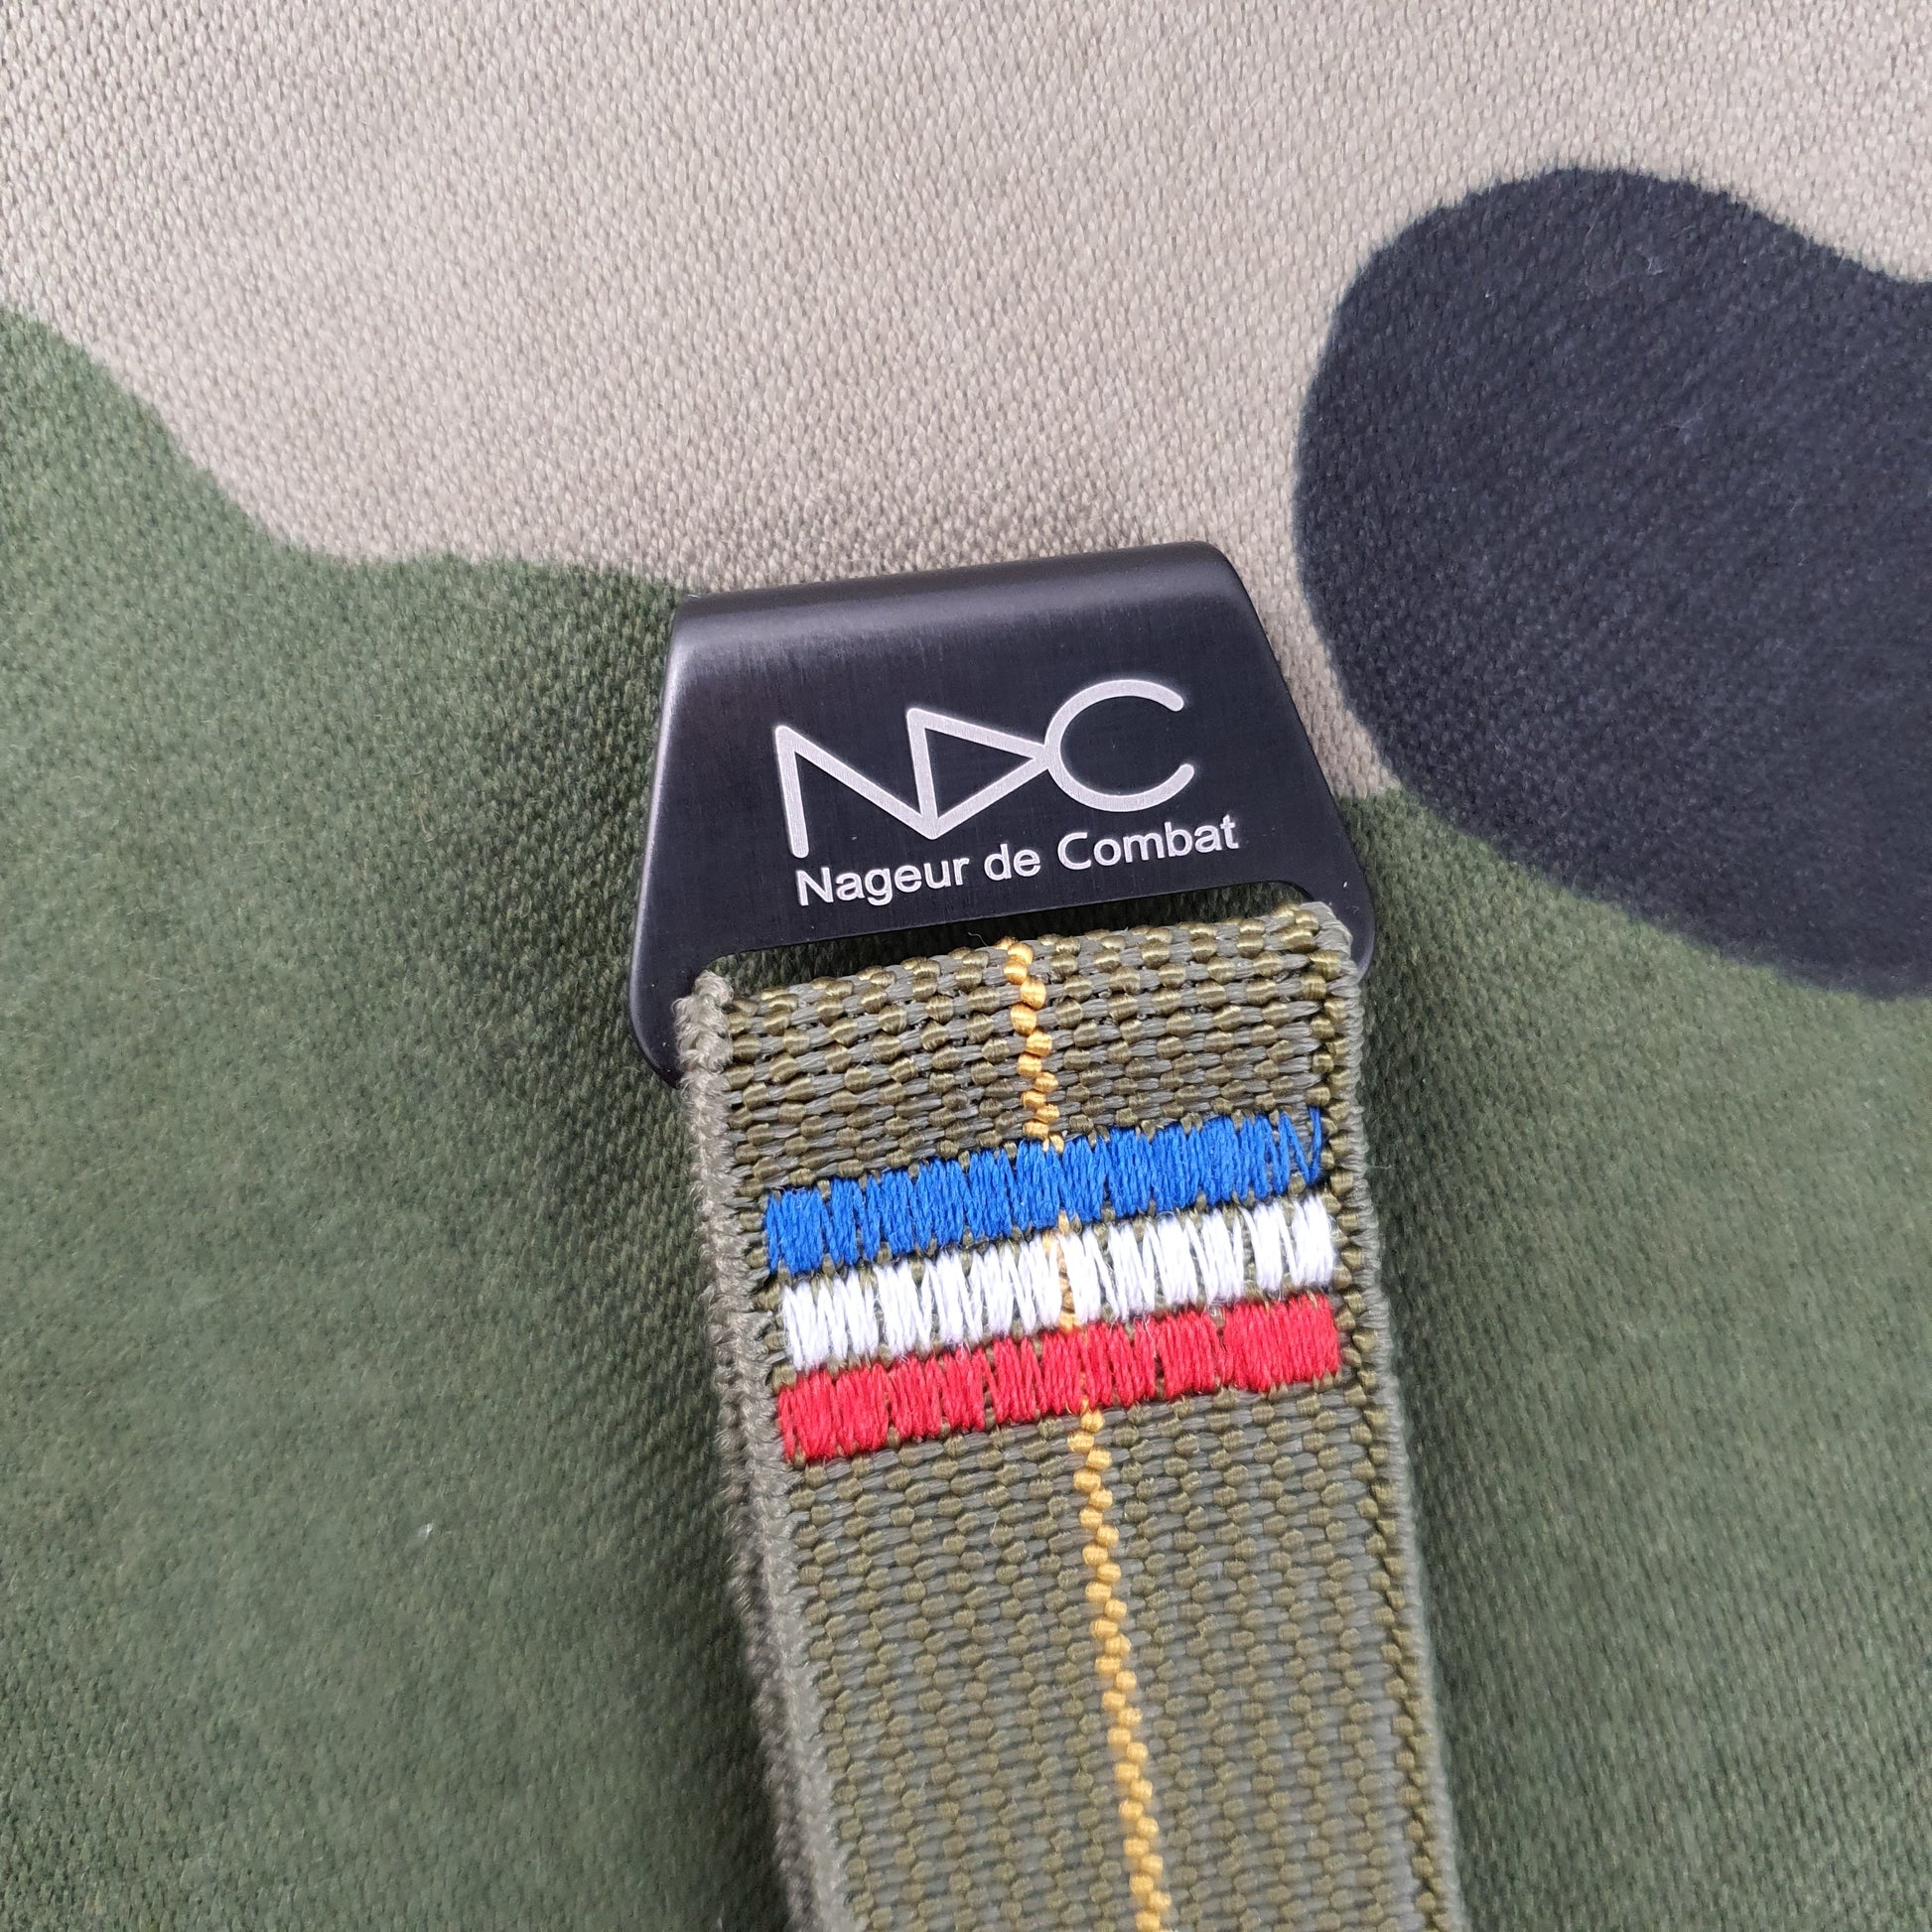 Original NDC strap - with Jumbo stitch - NDC Straps